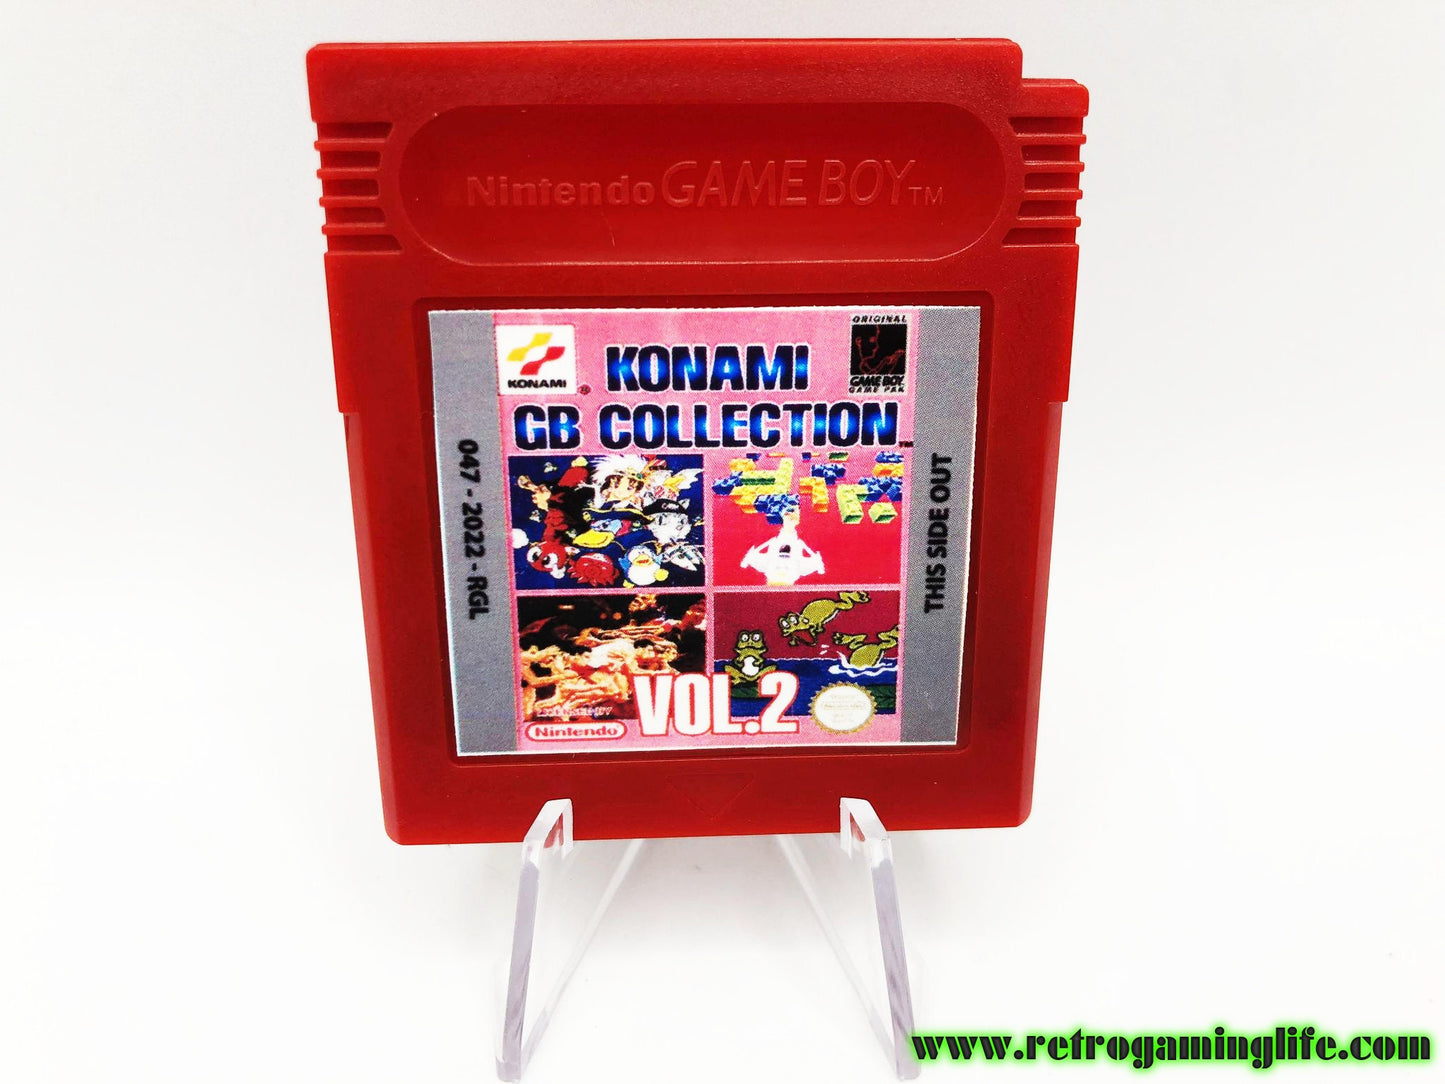 Konami Gameboy Collection Vol 2 Gameboy Game Cart Repro